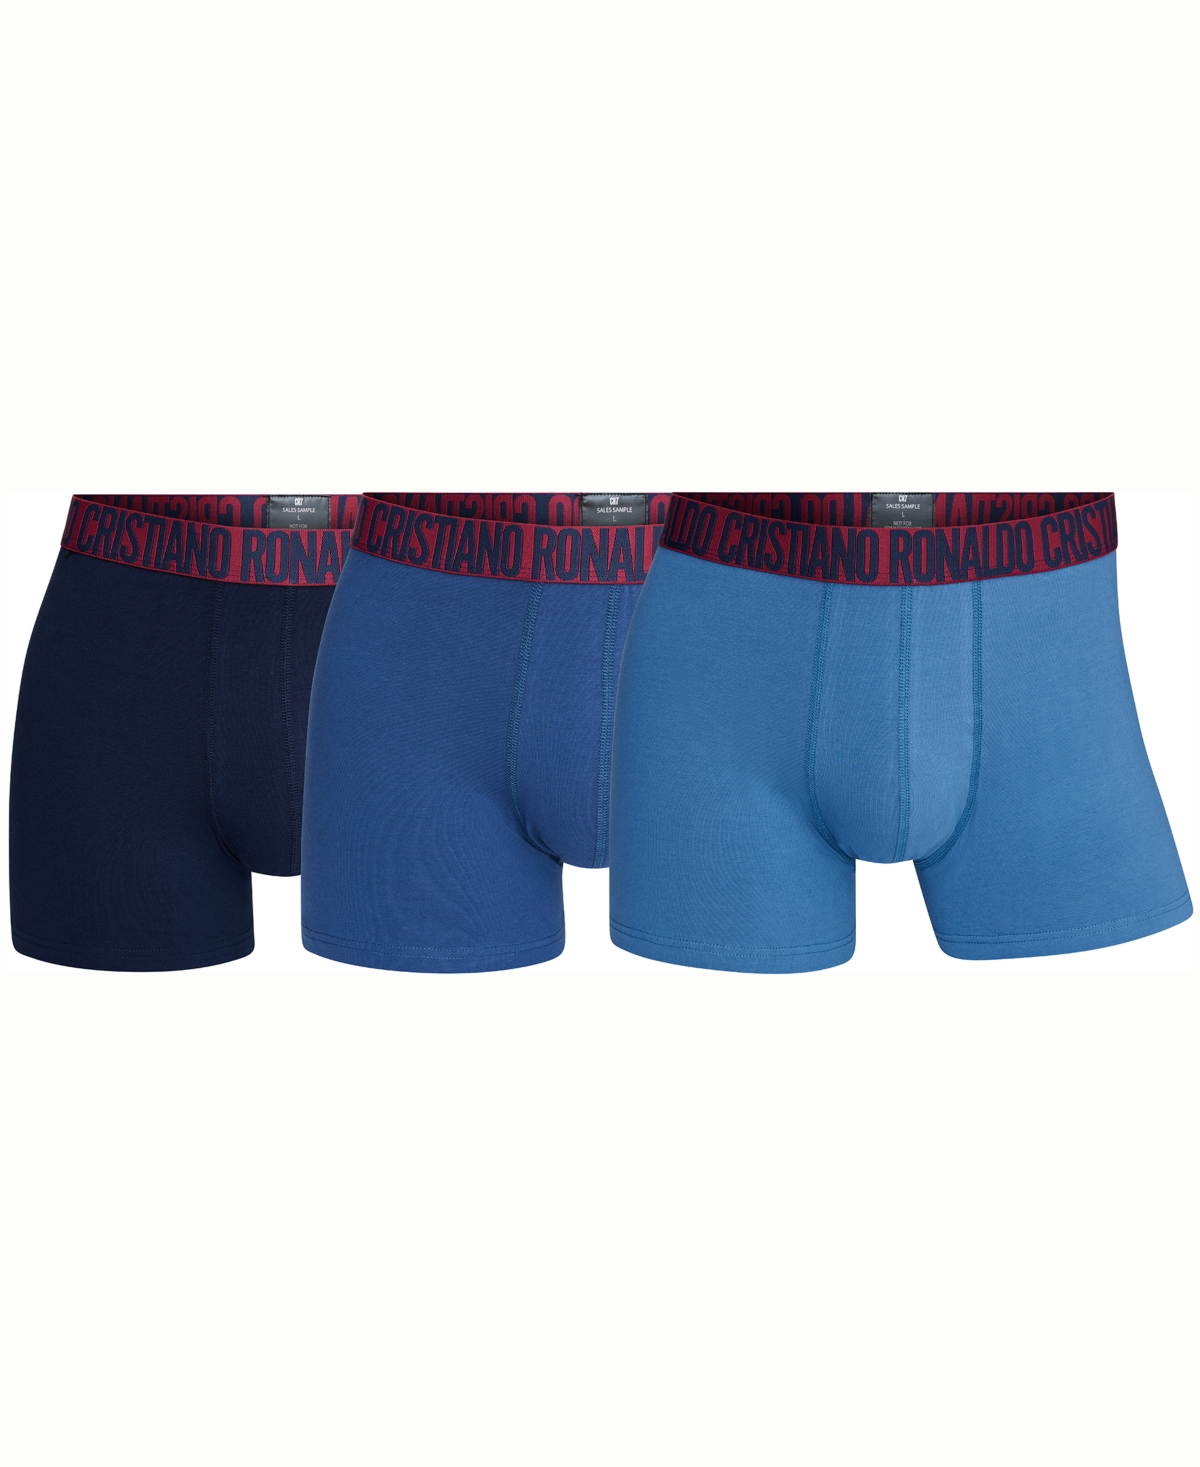 Men's Cotton Blend Trunks, Pack of 3 - Dark Blue, Light Blue, Dark Pink